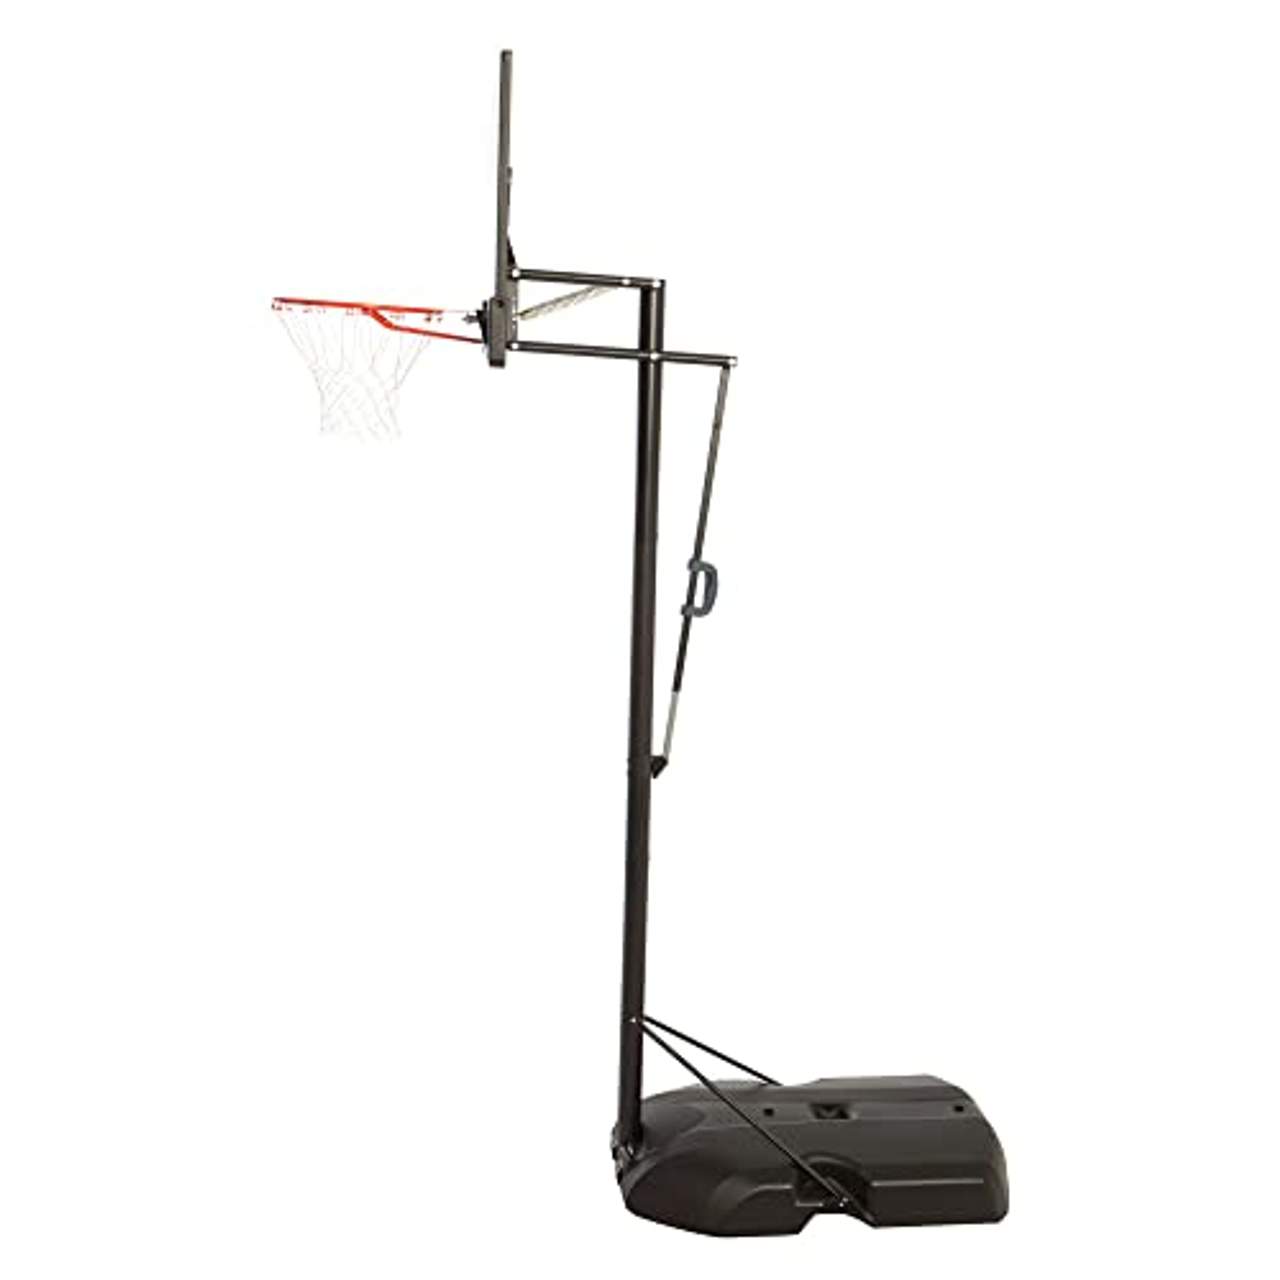 LIFETIME Basketballanlage New York Portable